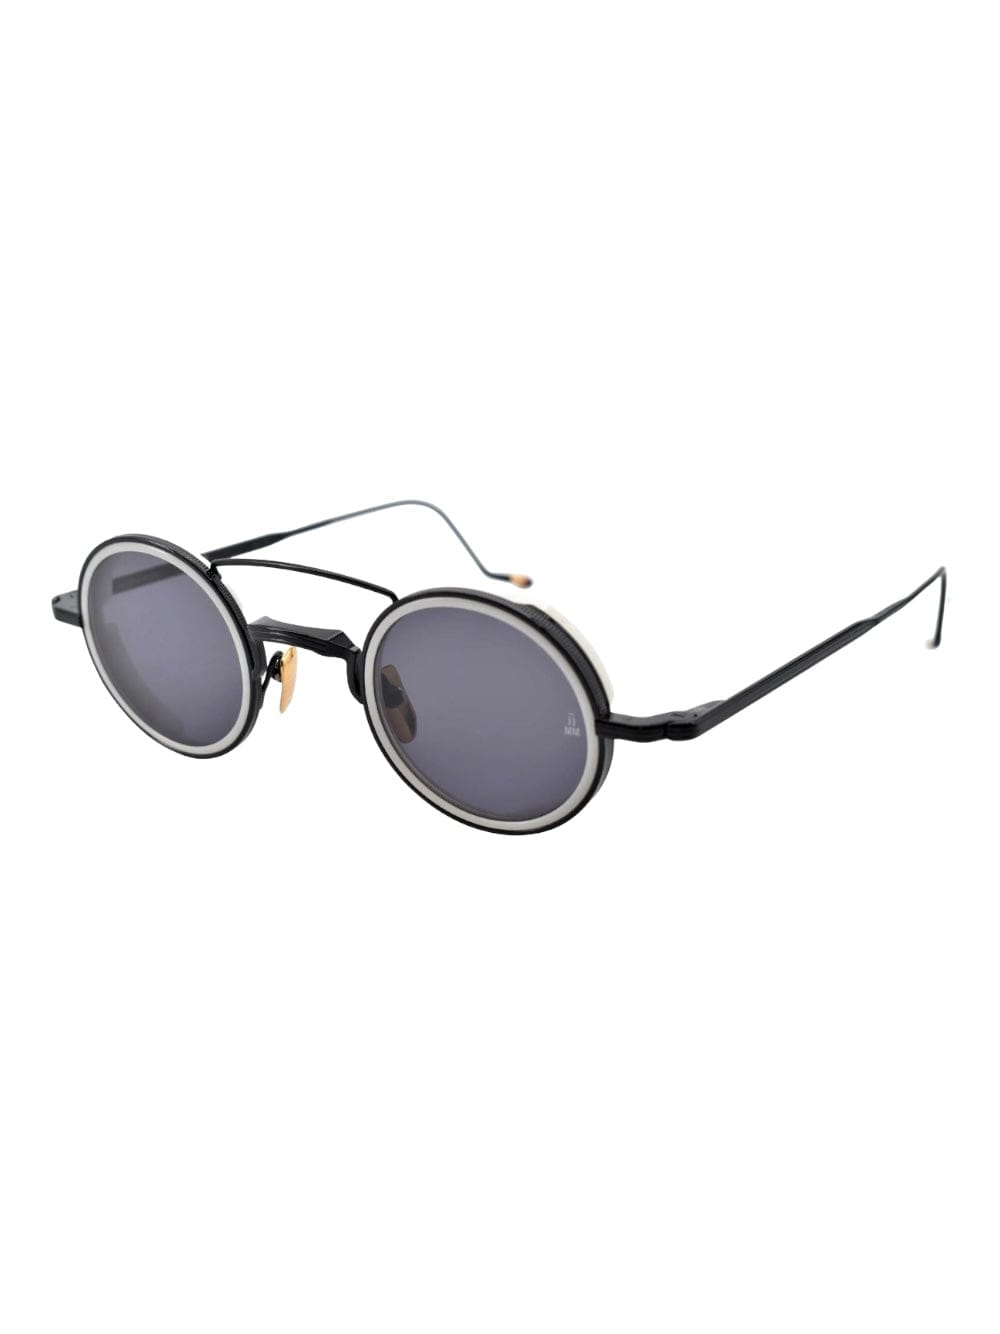 Jacques Marie Mage Ringo Sunglasses In Black